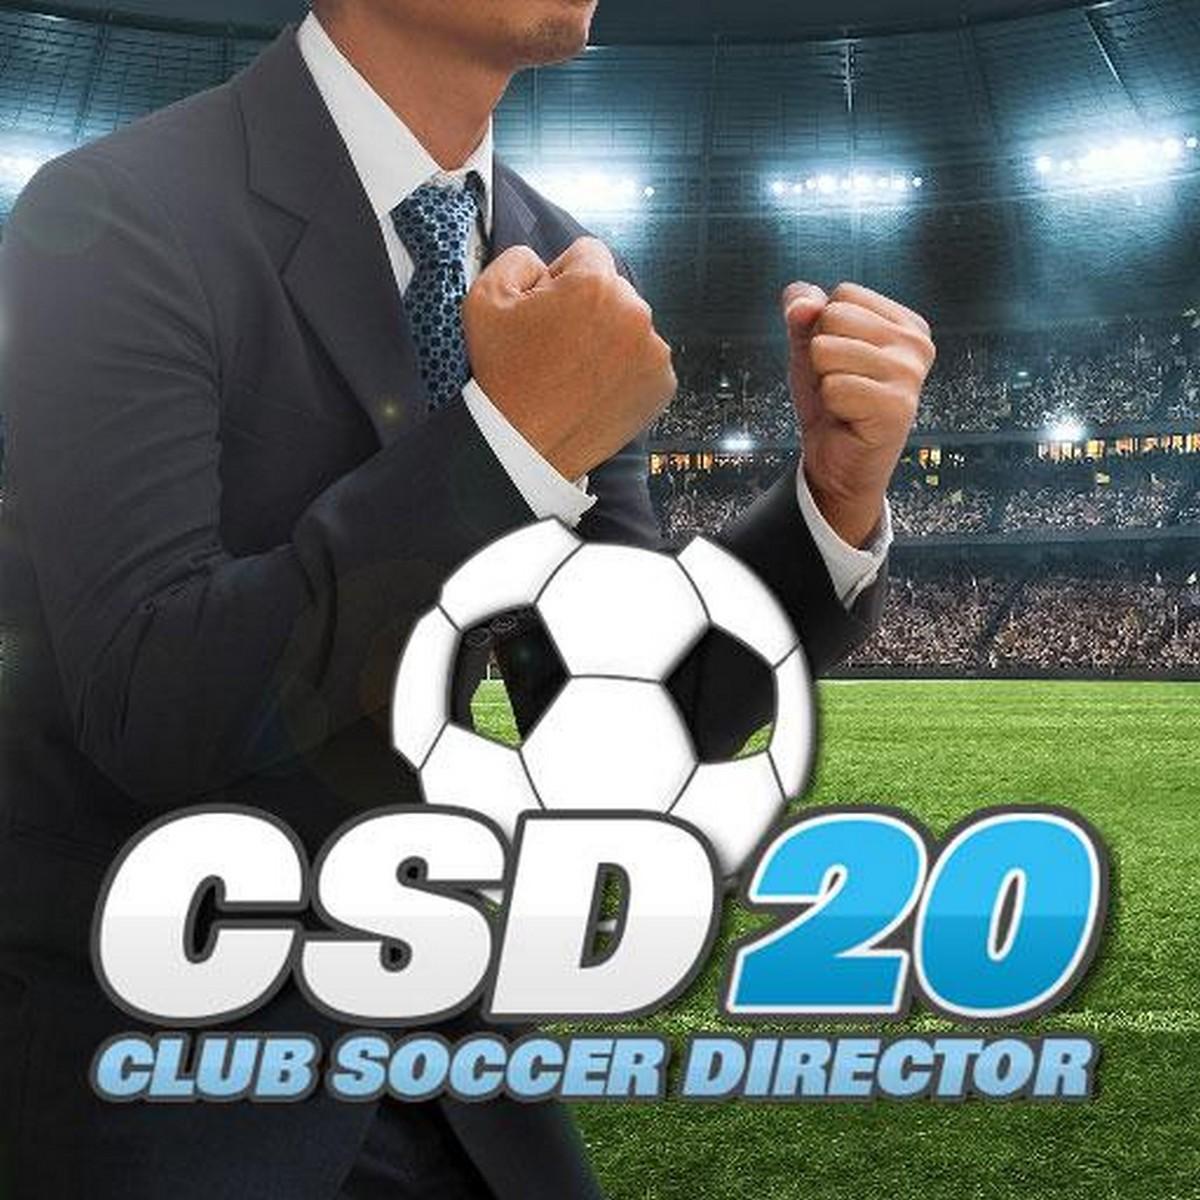 Club Soccer Director 2020 APK MOD v1.0.81 (Dinero infinito)